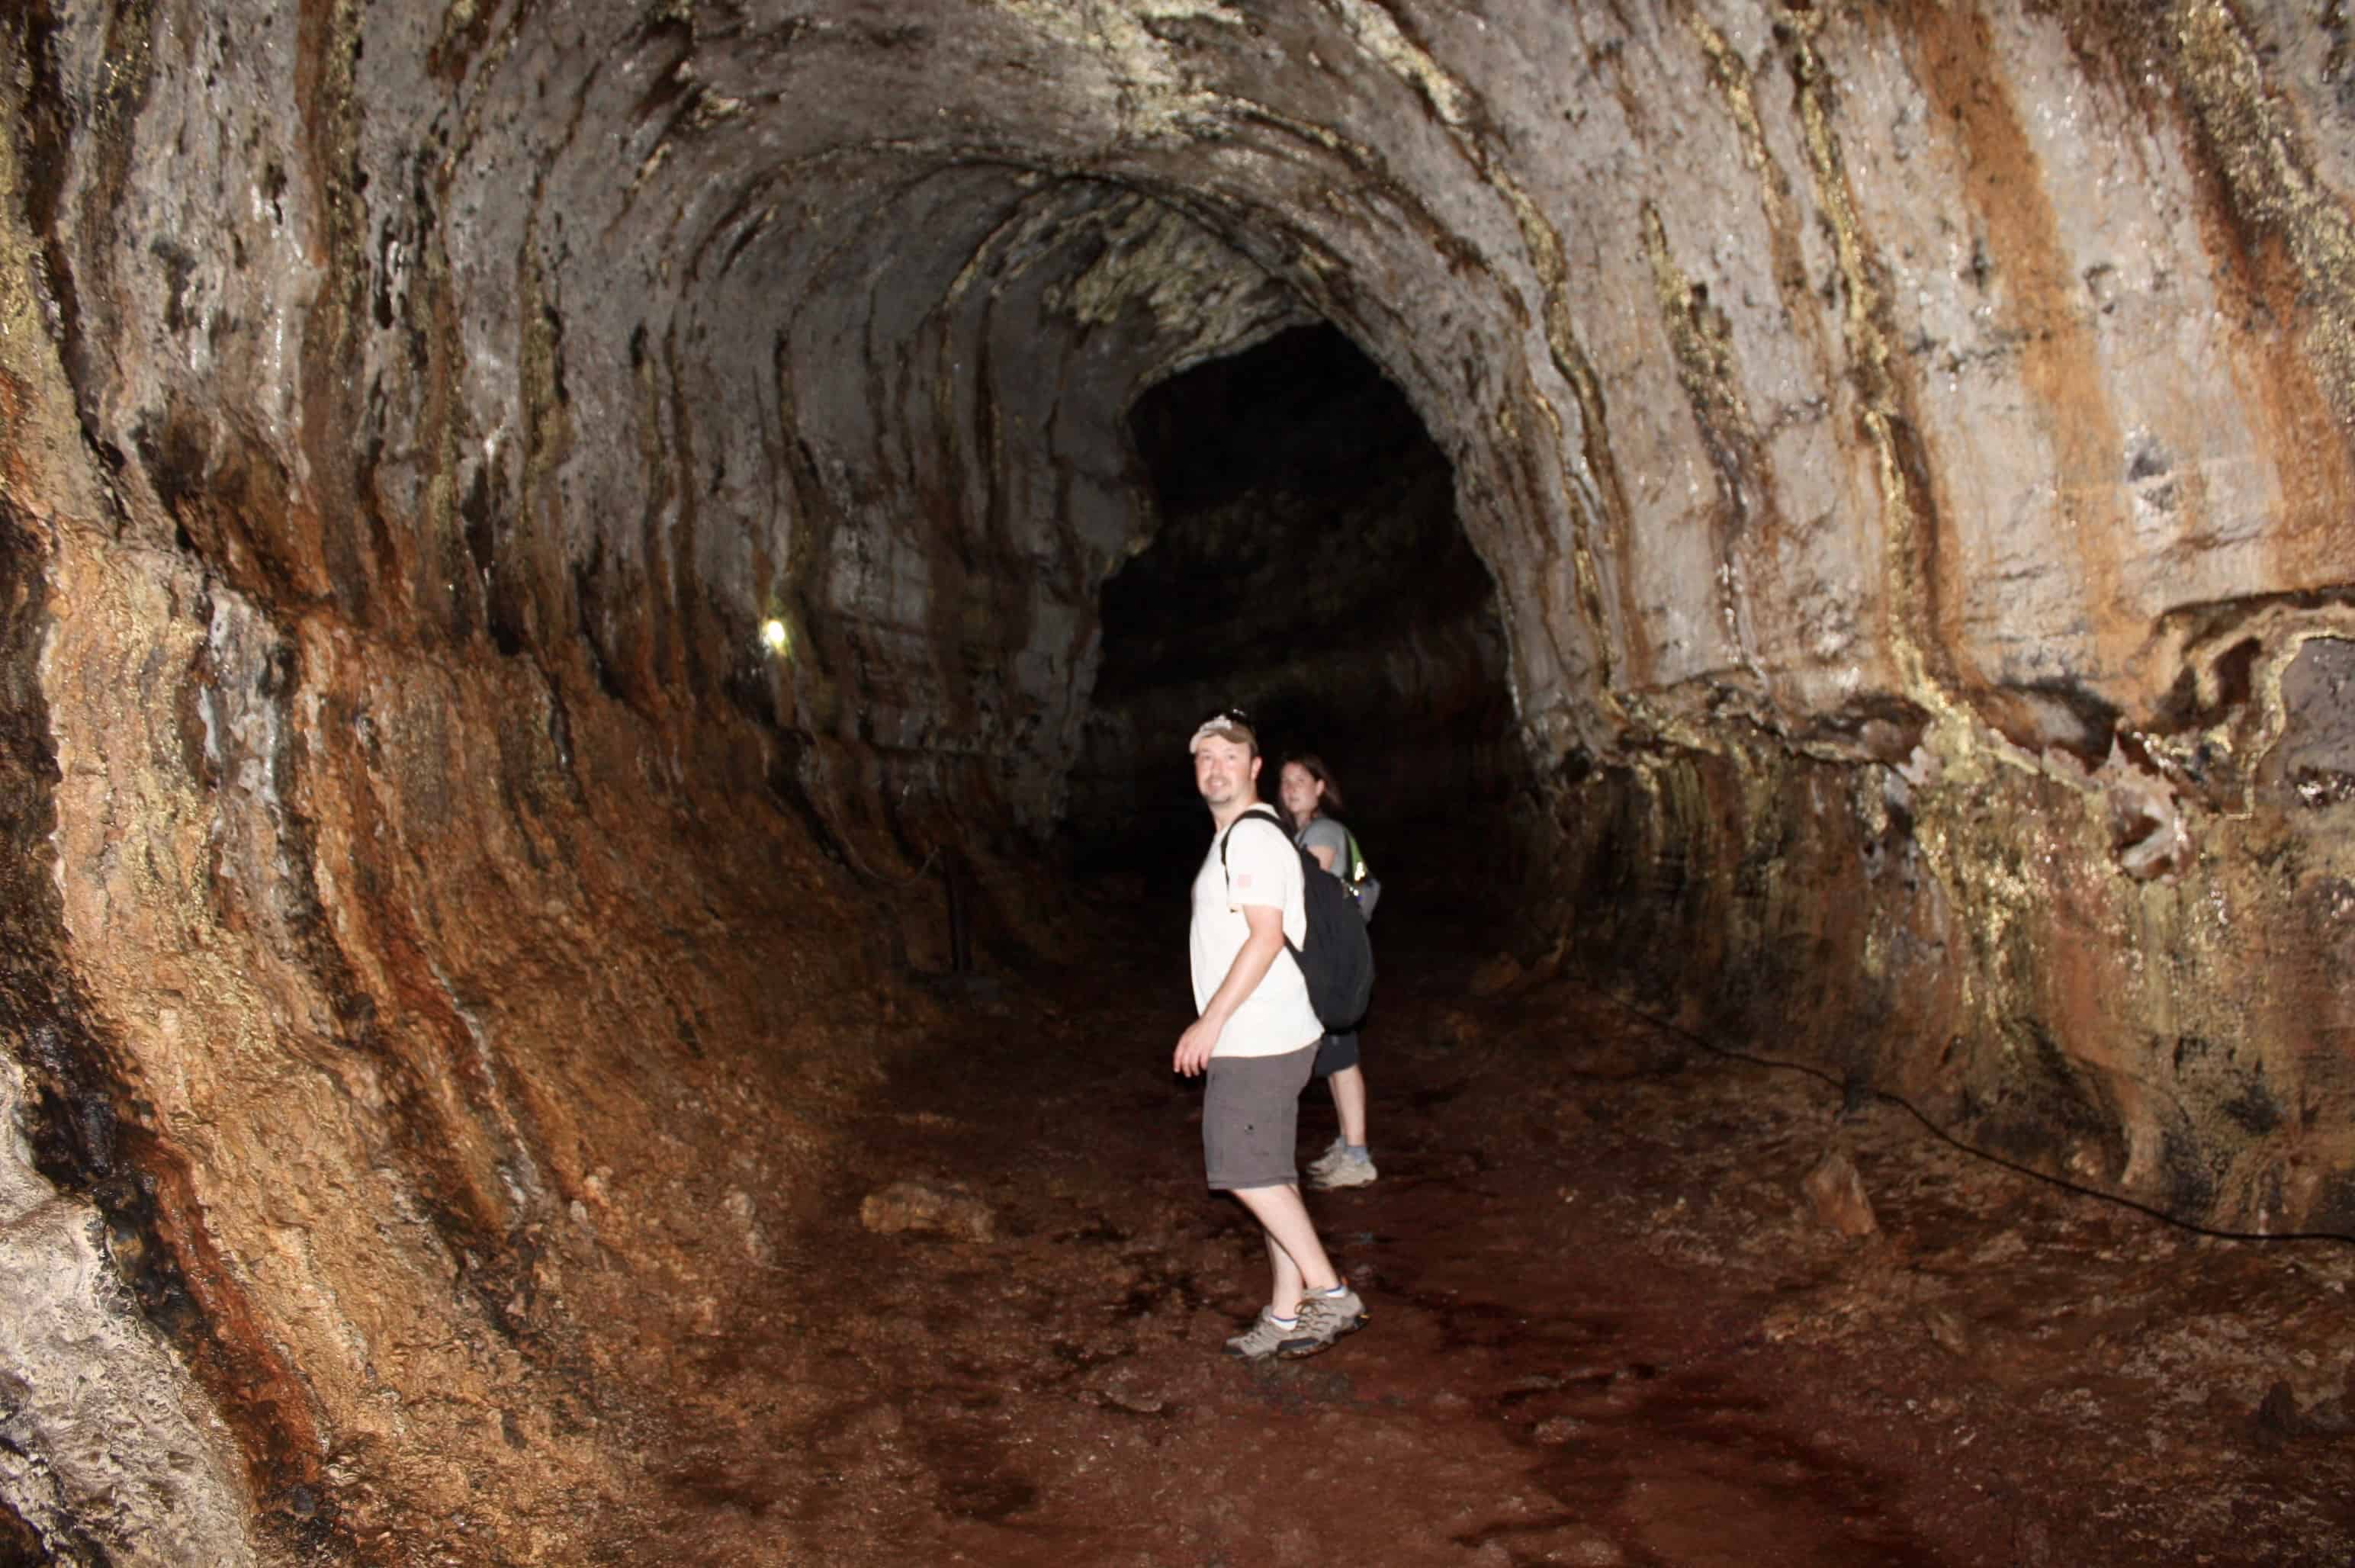 Lava tunnel, Santa Cruz, Galapagos